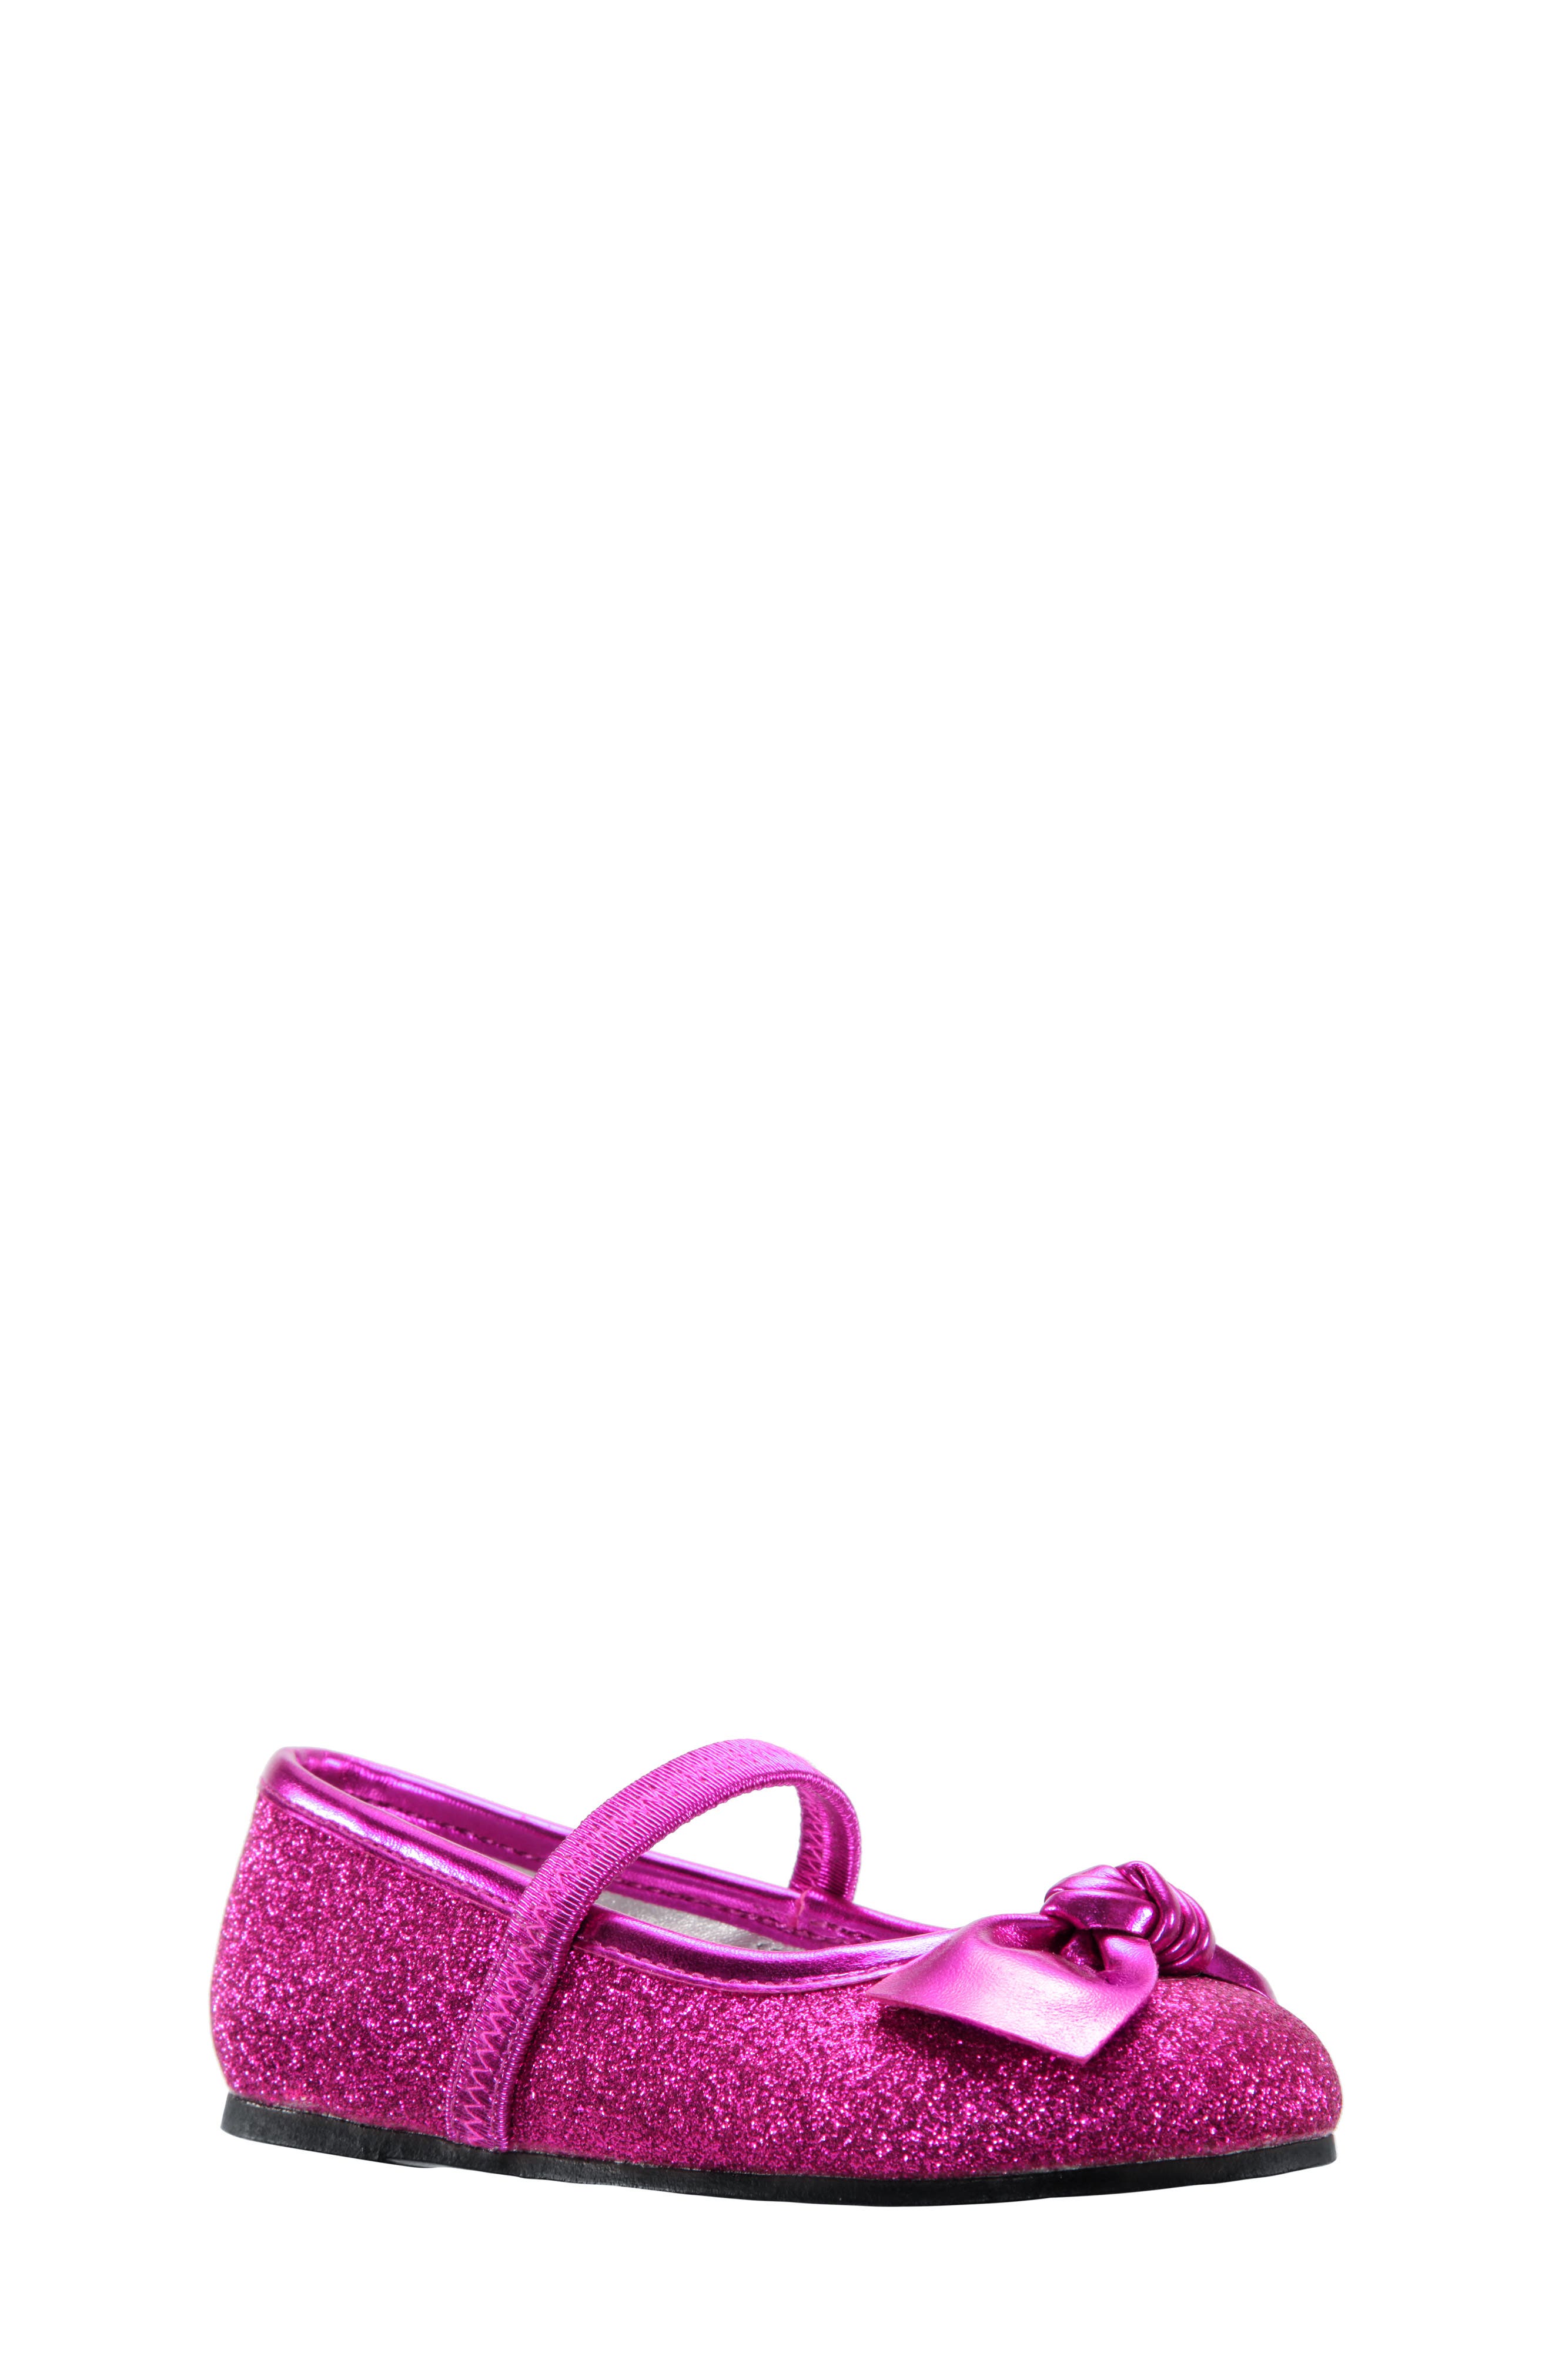 UPC 794378369172 product image for Toddler Girl's Nina Larabeth-T Glitter Bow Ballet Flat, Size 11 M - Pink | upcitemdb.com